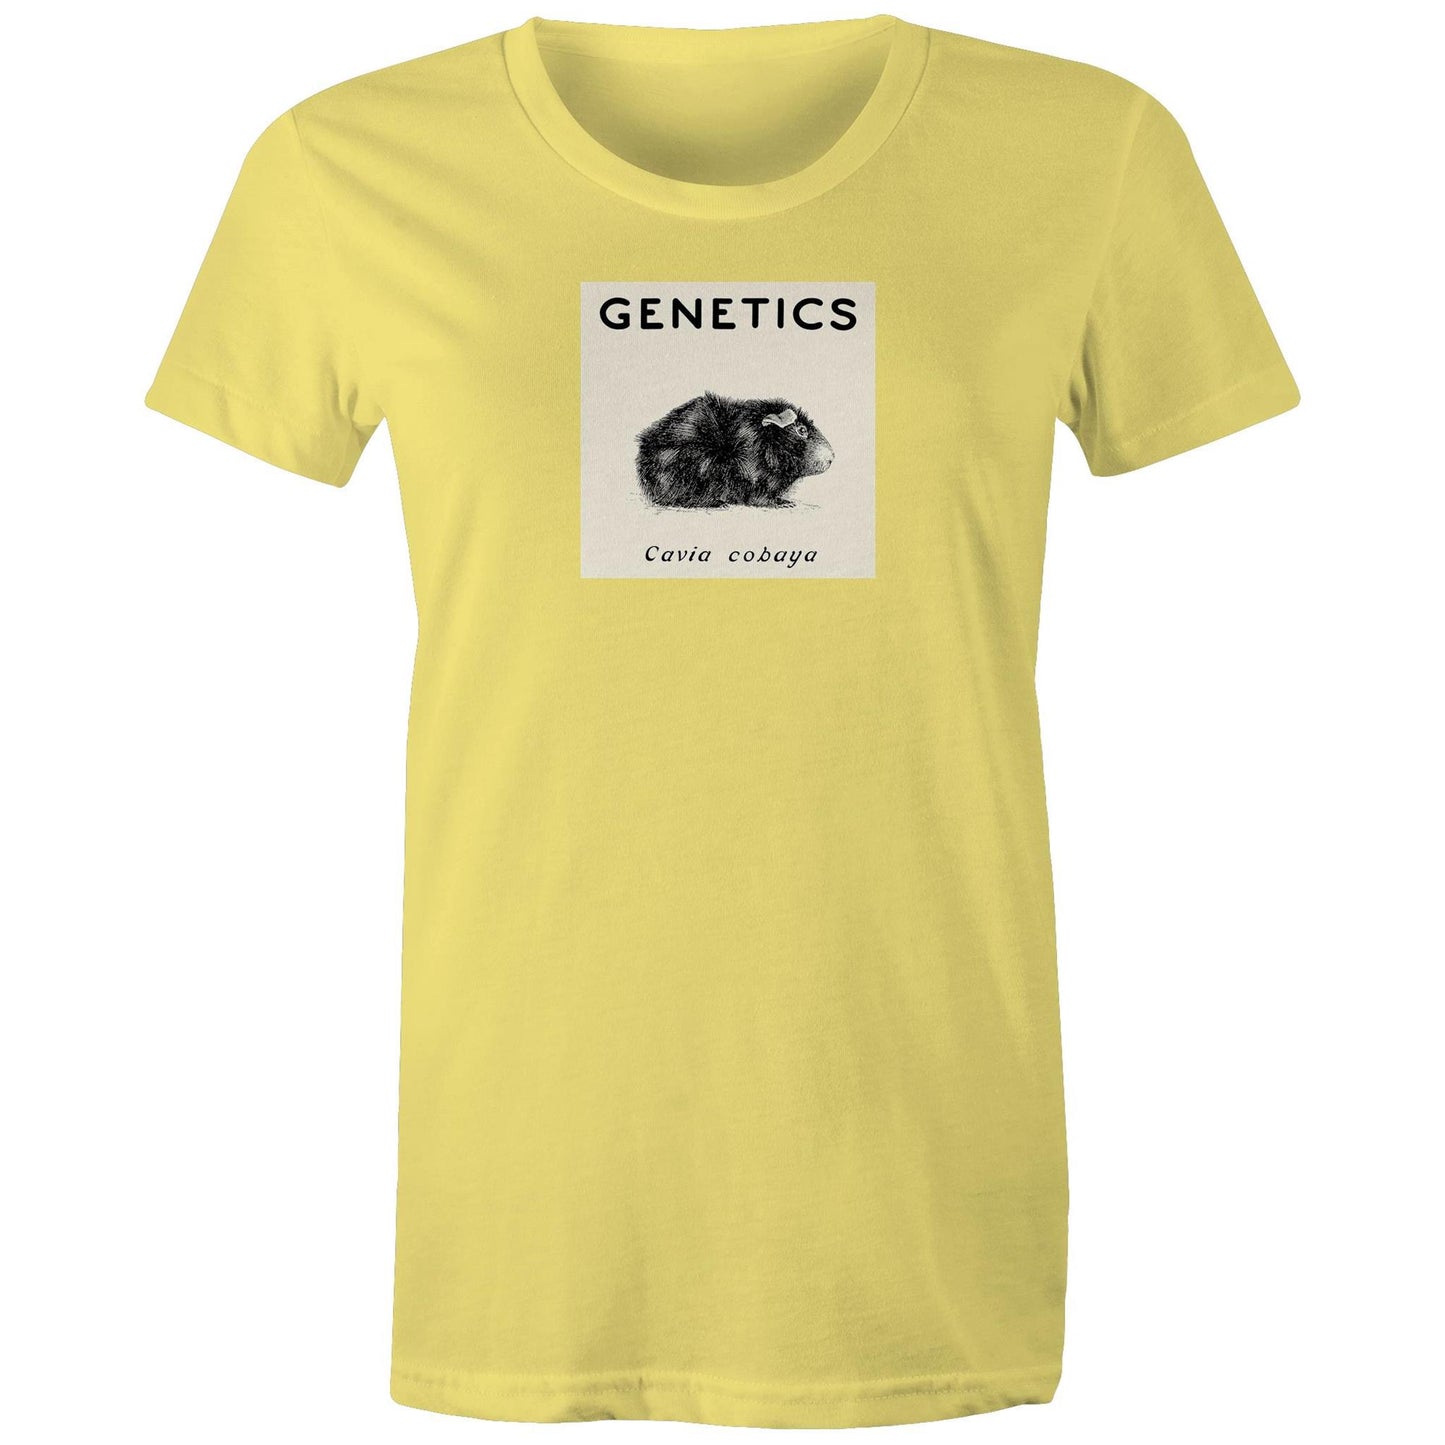 Genetics T Shirts for Women